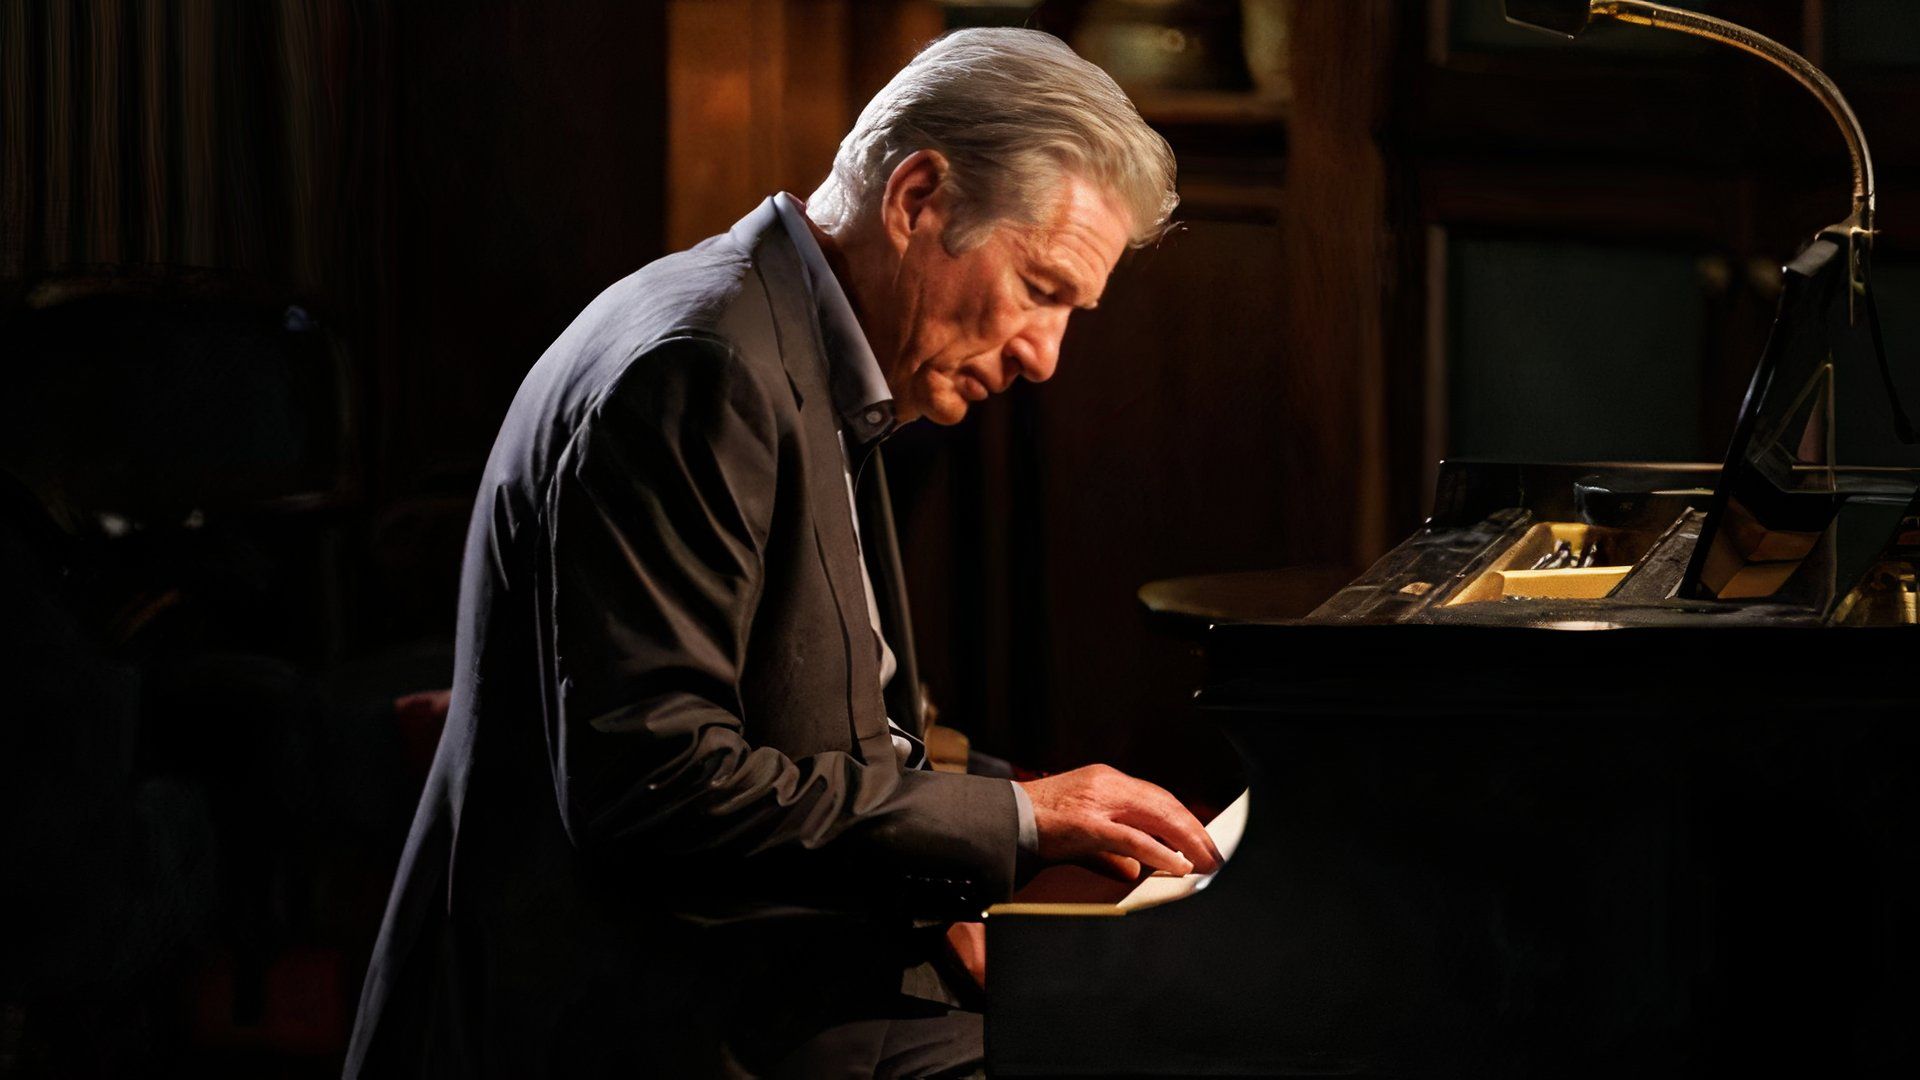 Richard Gere plays piano in the movie Longing from Savi Gabizon